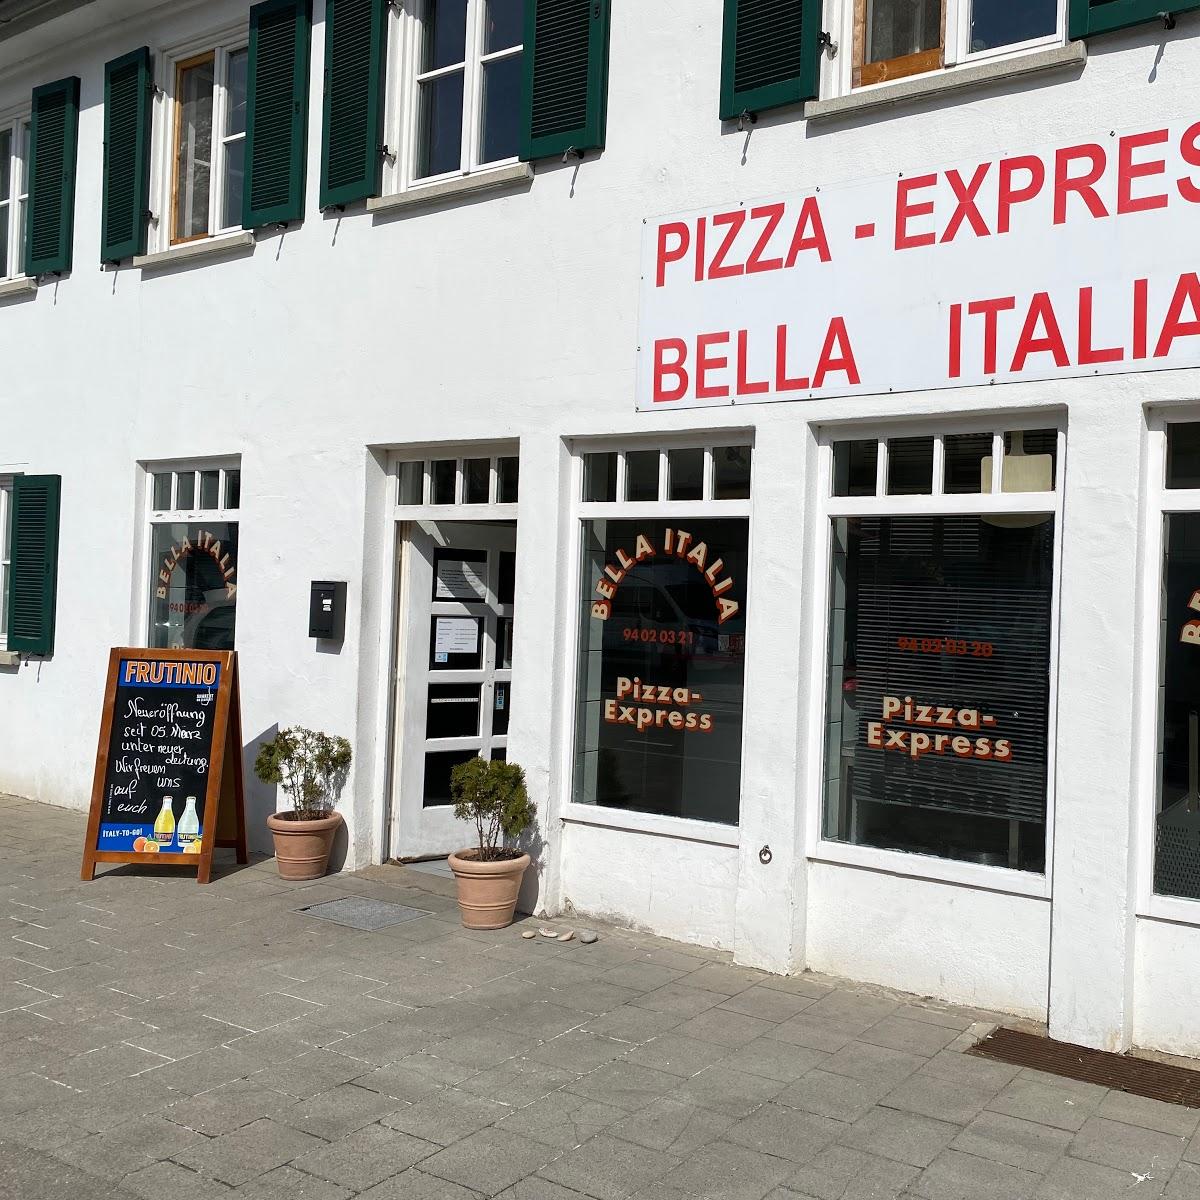 Restaurant "Bella Italia - Pizzaexpress & Vinothek" in Ulm